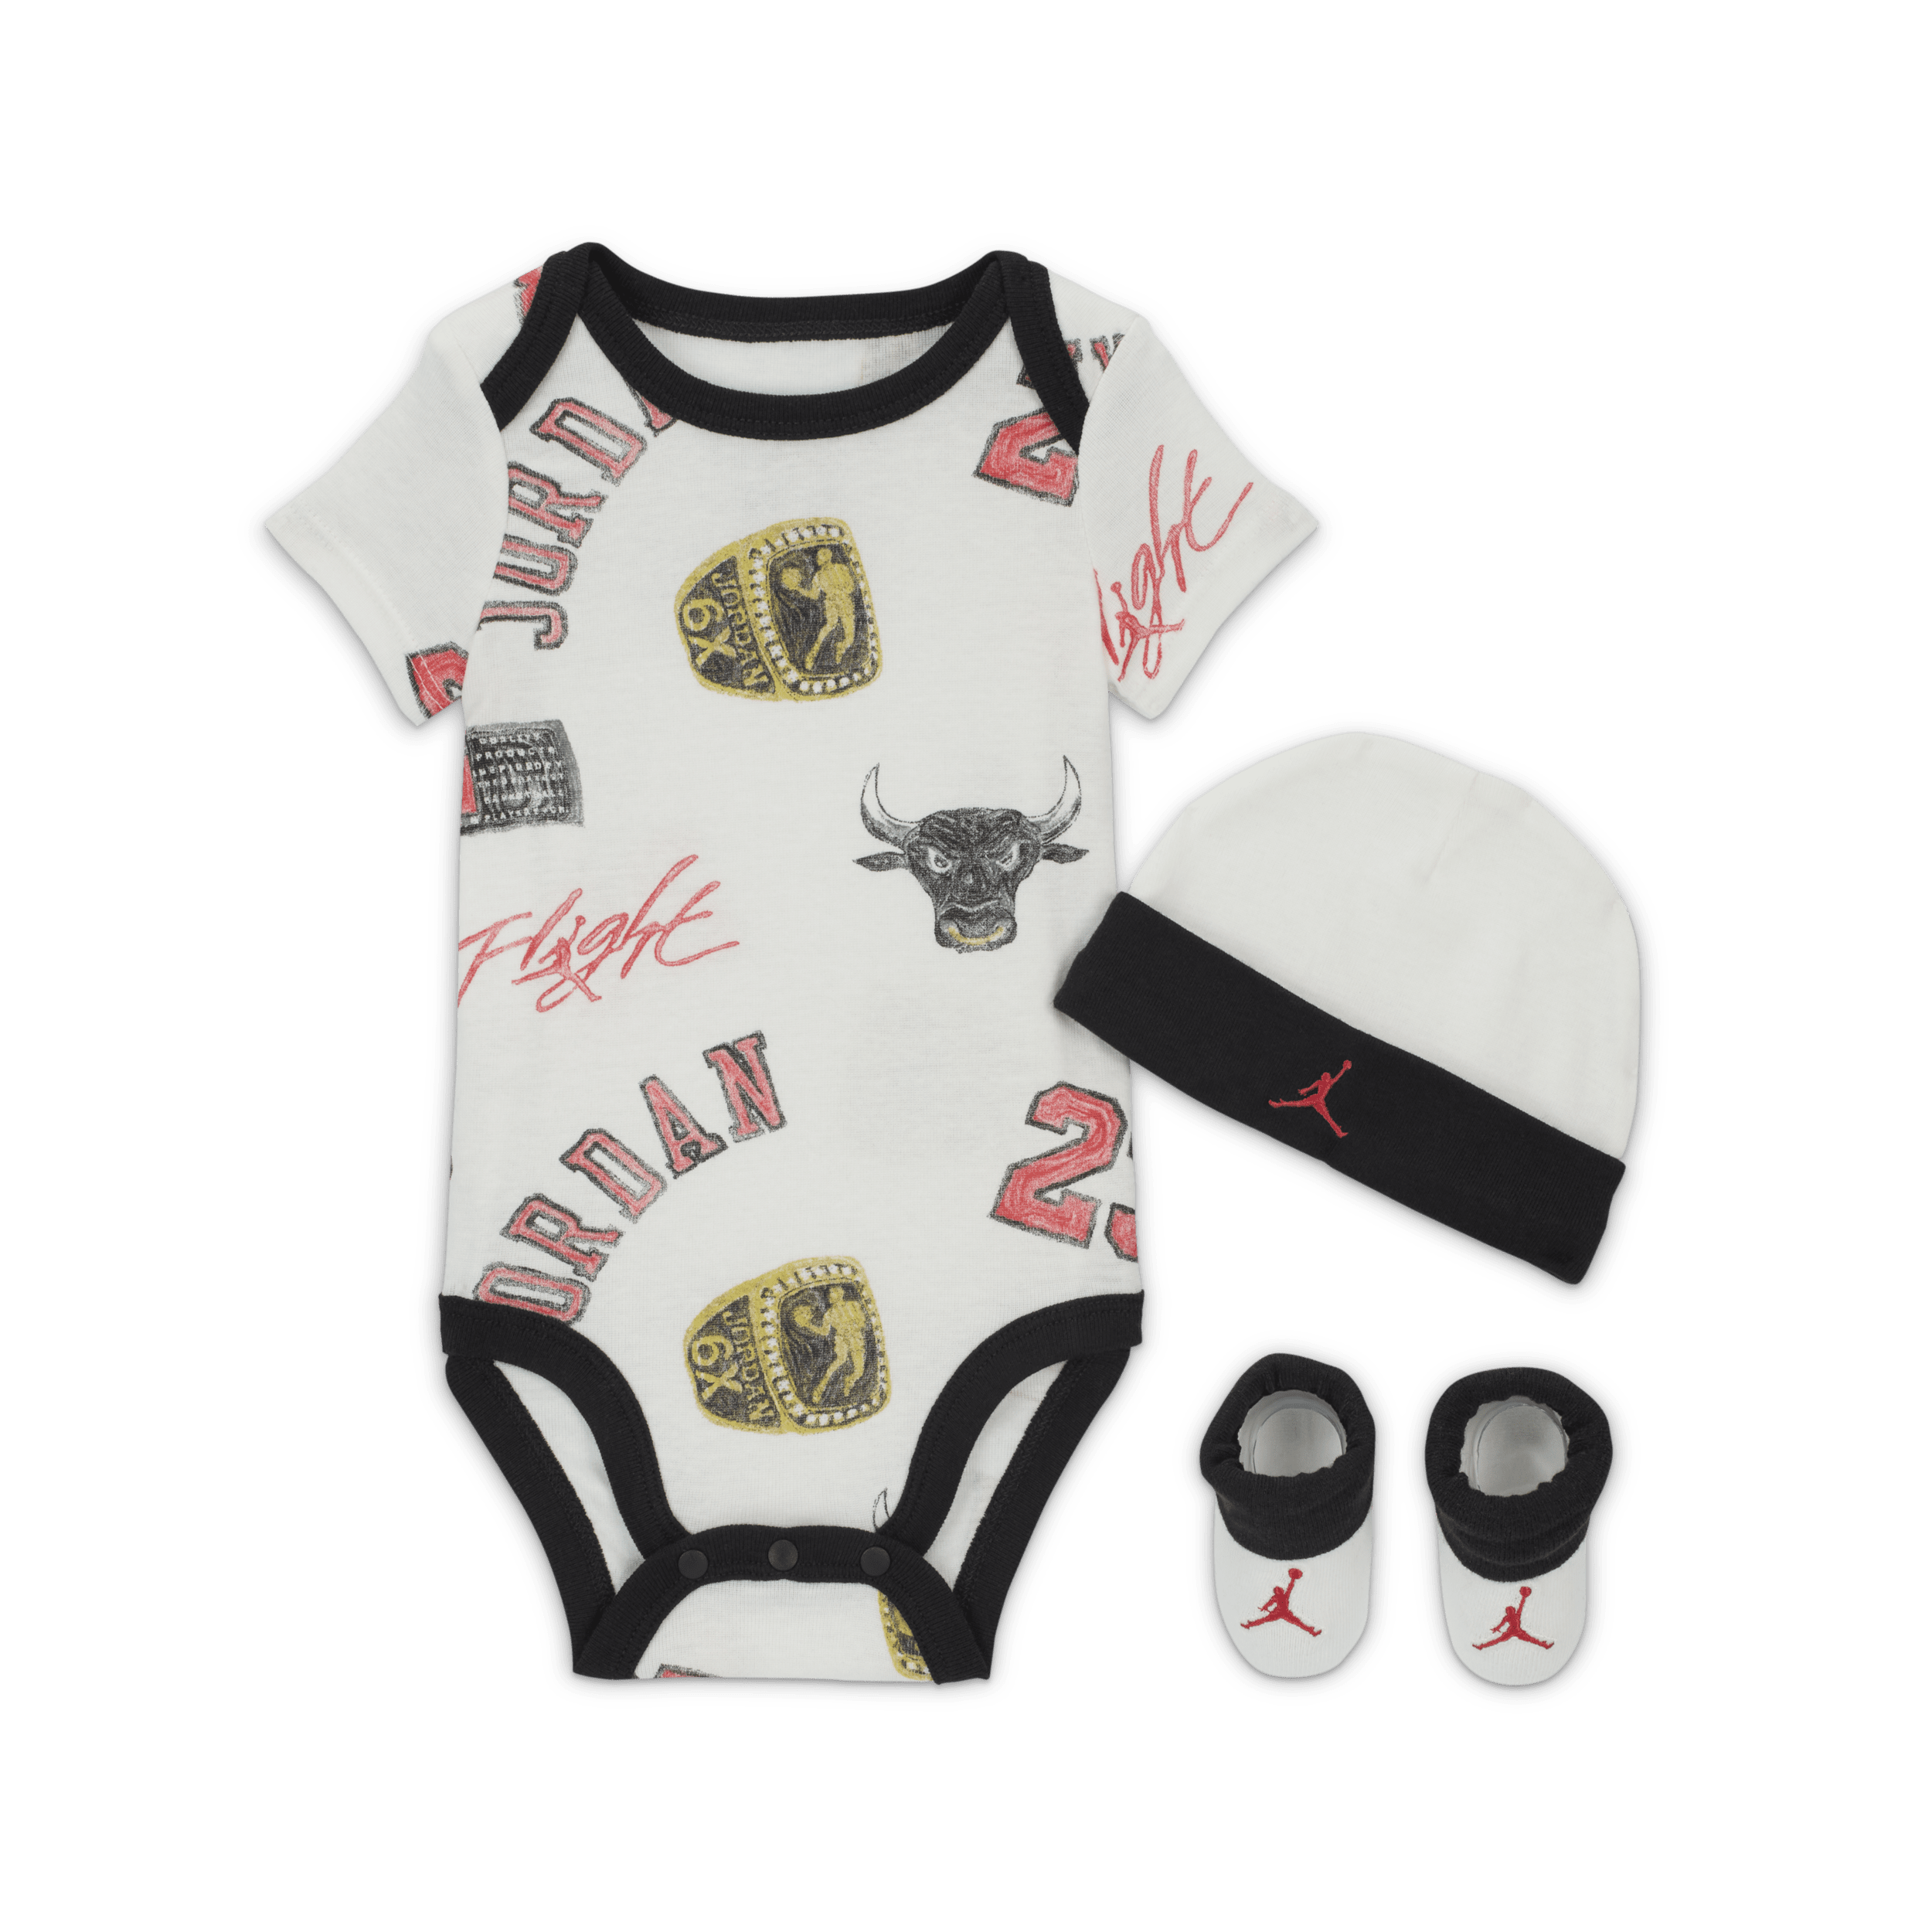 Jordan MJ Essentials driedelige babyset met print - Wit